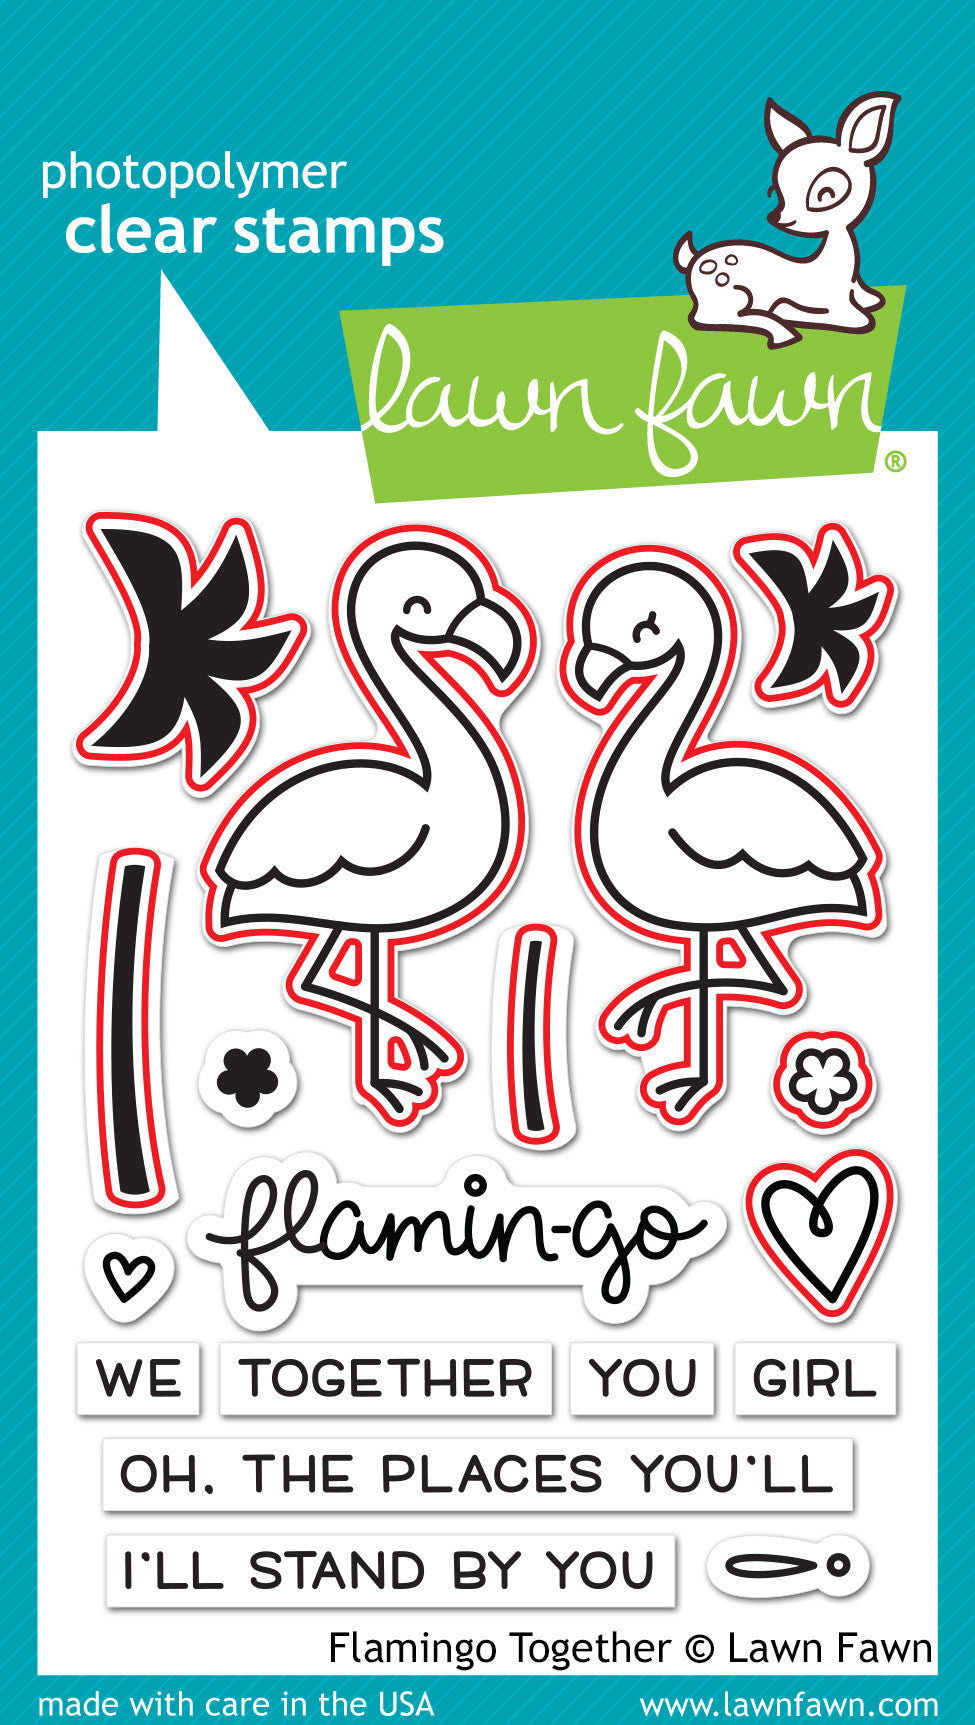 flamingo together - lawn cuts